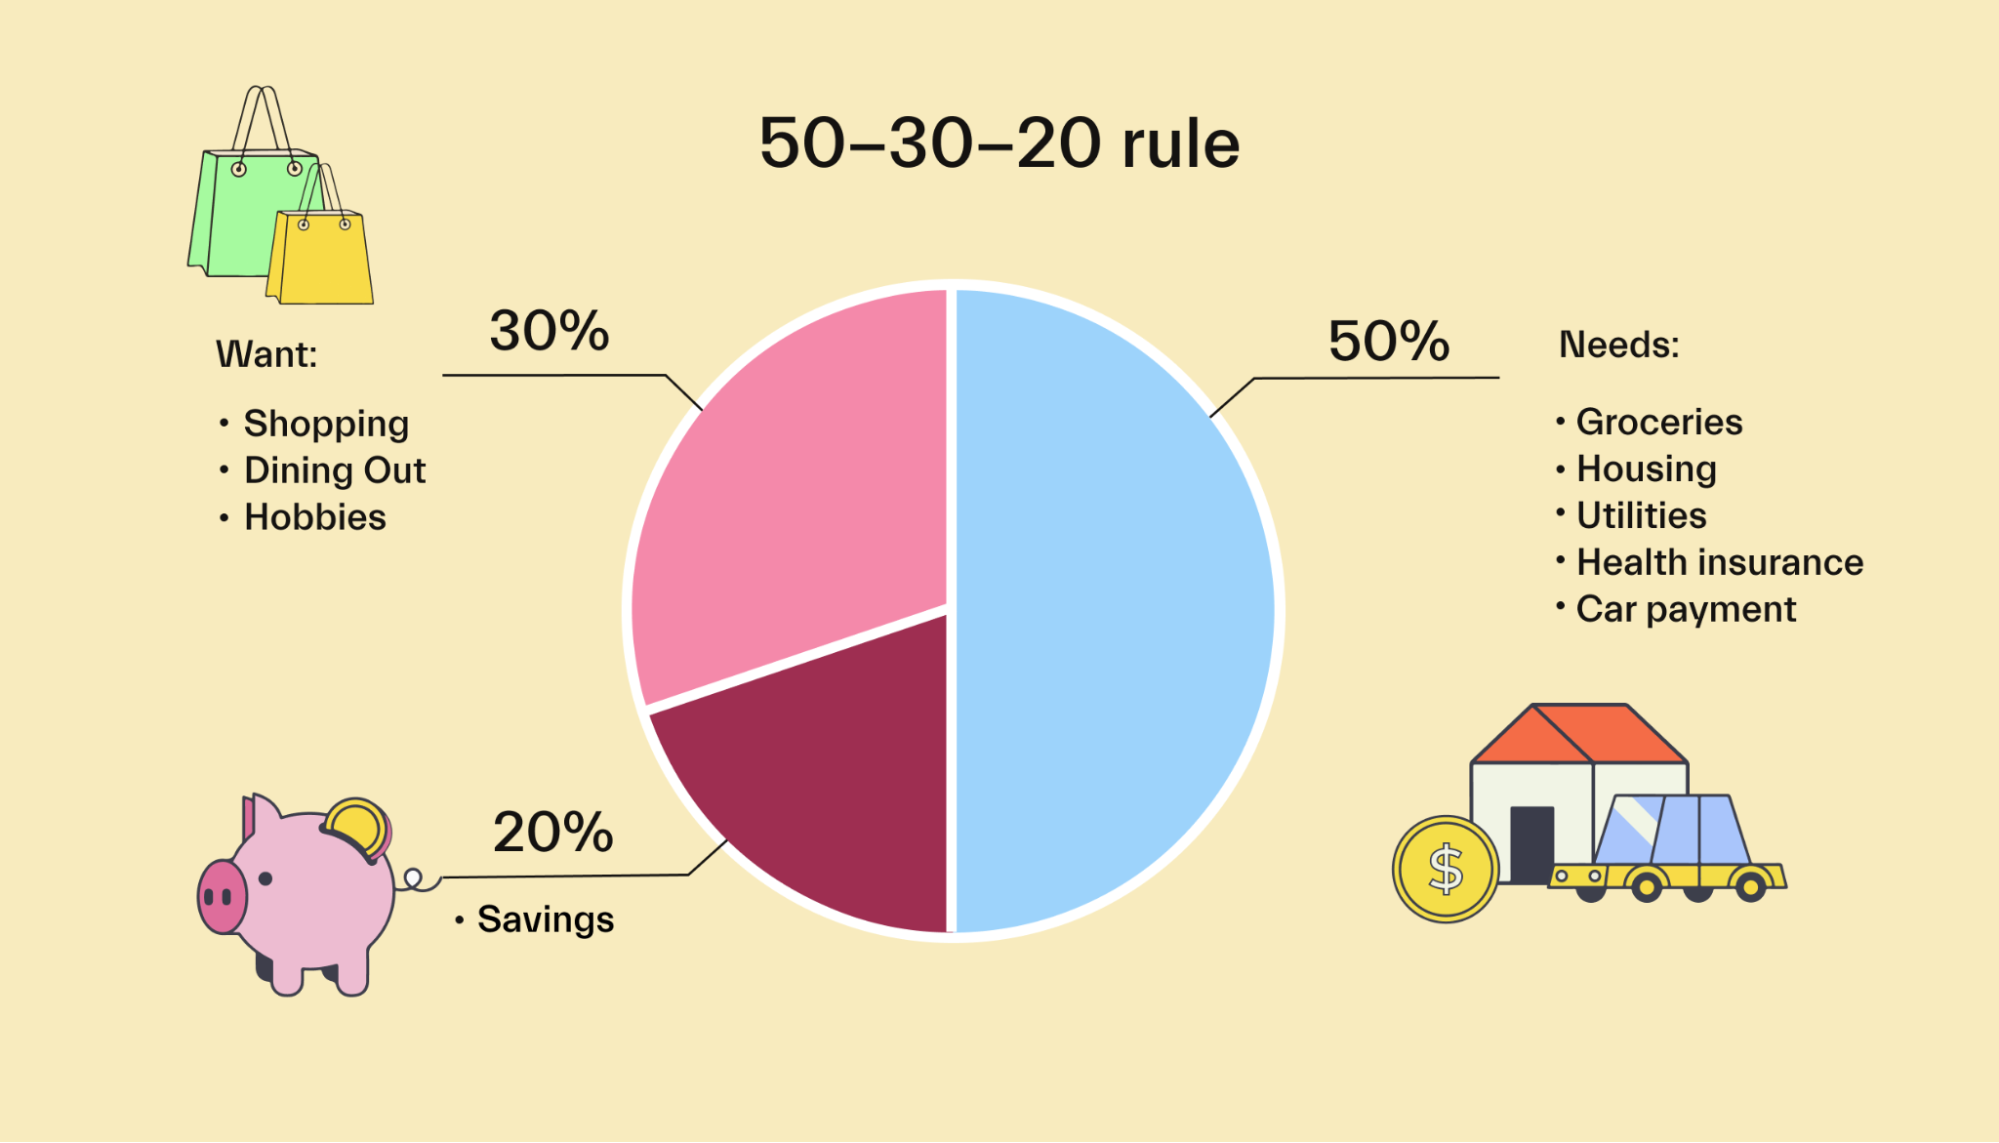 50-30-20 rule